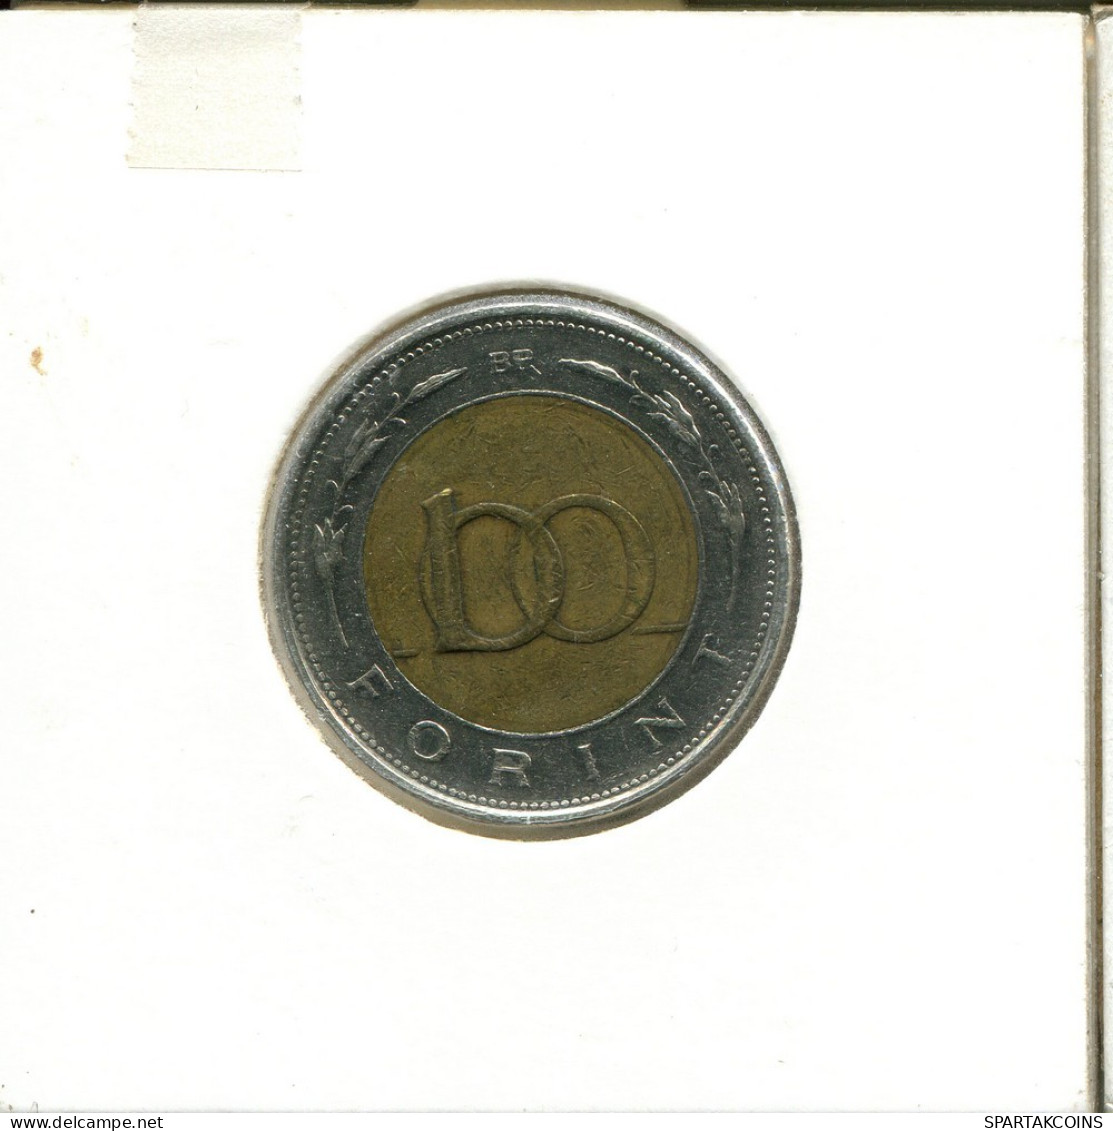 100 FORINT 1996 HONGRIE HUNGARY Pièce BIMETALLIC #AS510.F.A - Ungarn